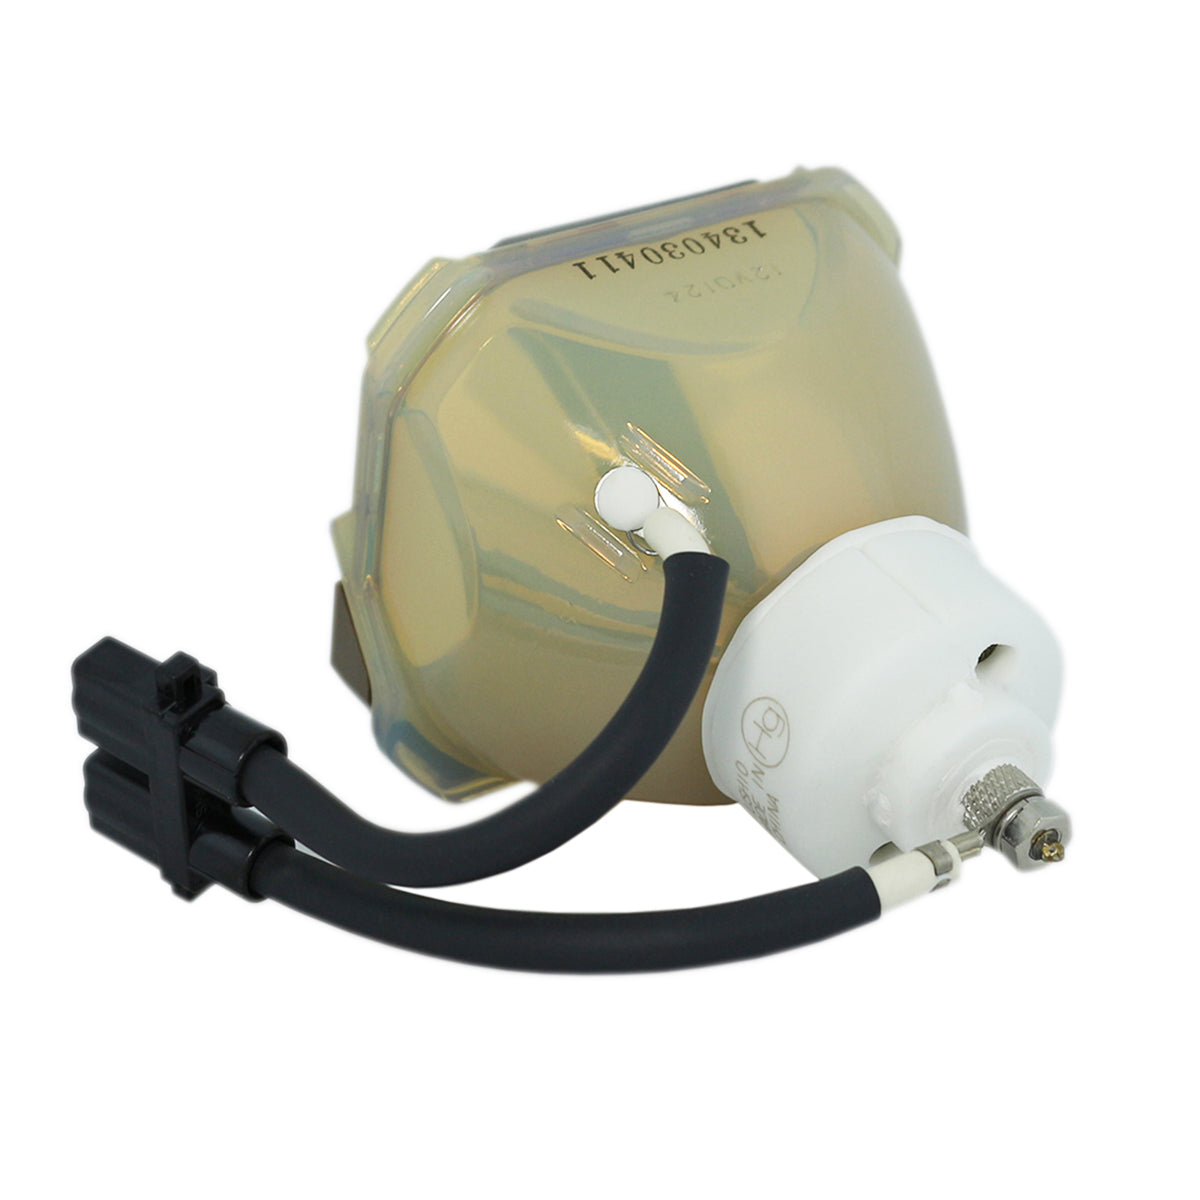 Hitachi DT00331 Ushio Projector Bare Lamp